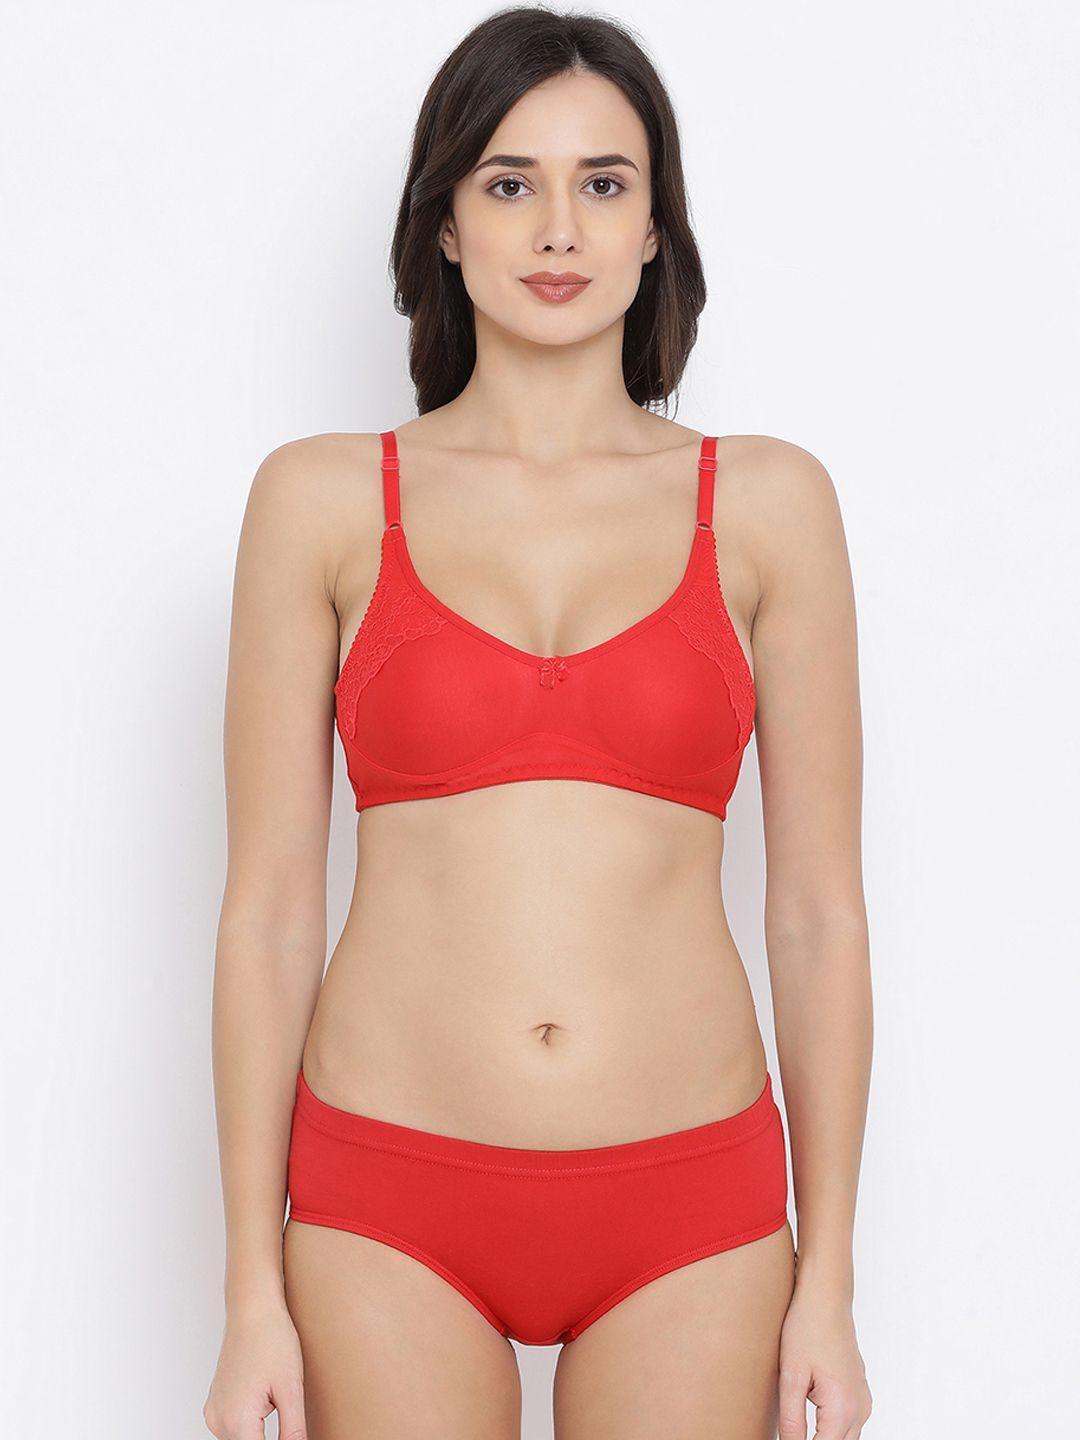 clovia women red solid lingerie set combbp74432b